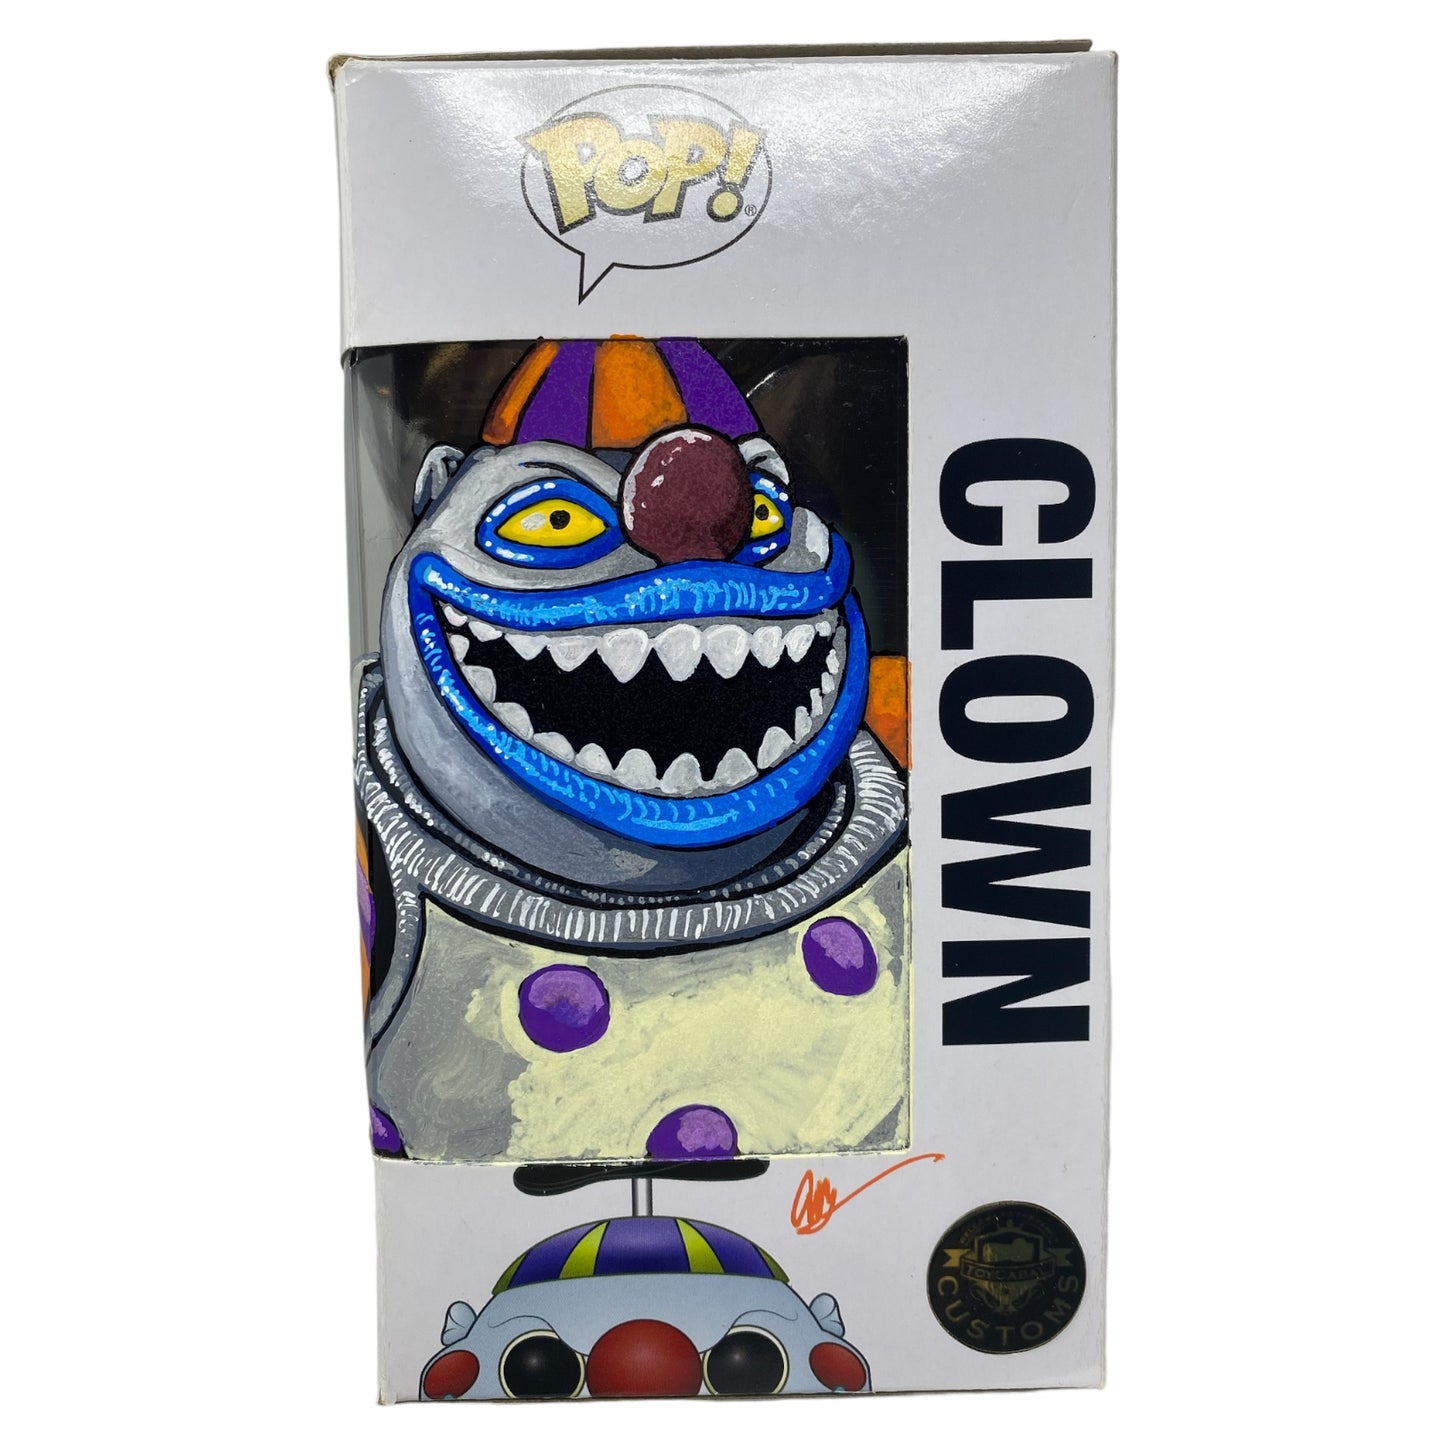 Disney - Clown 452, TCC X “Mooch” Custom